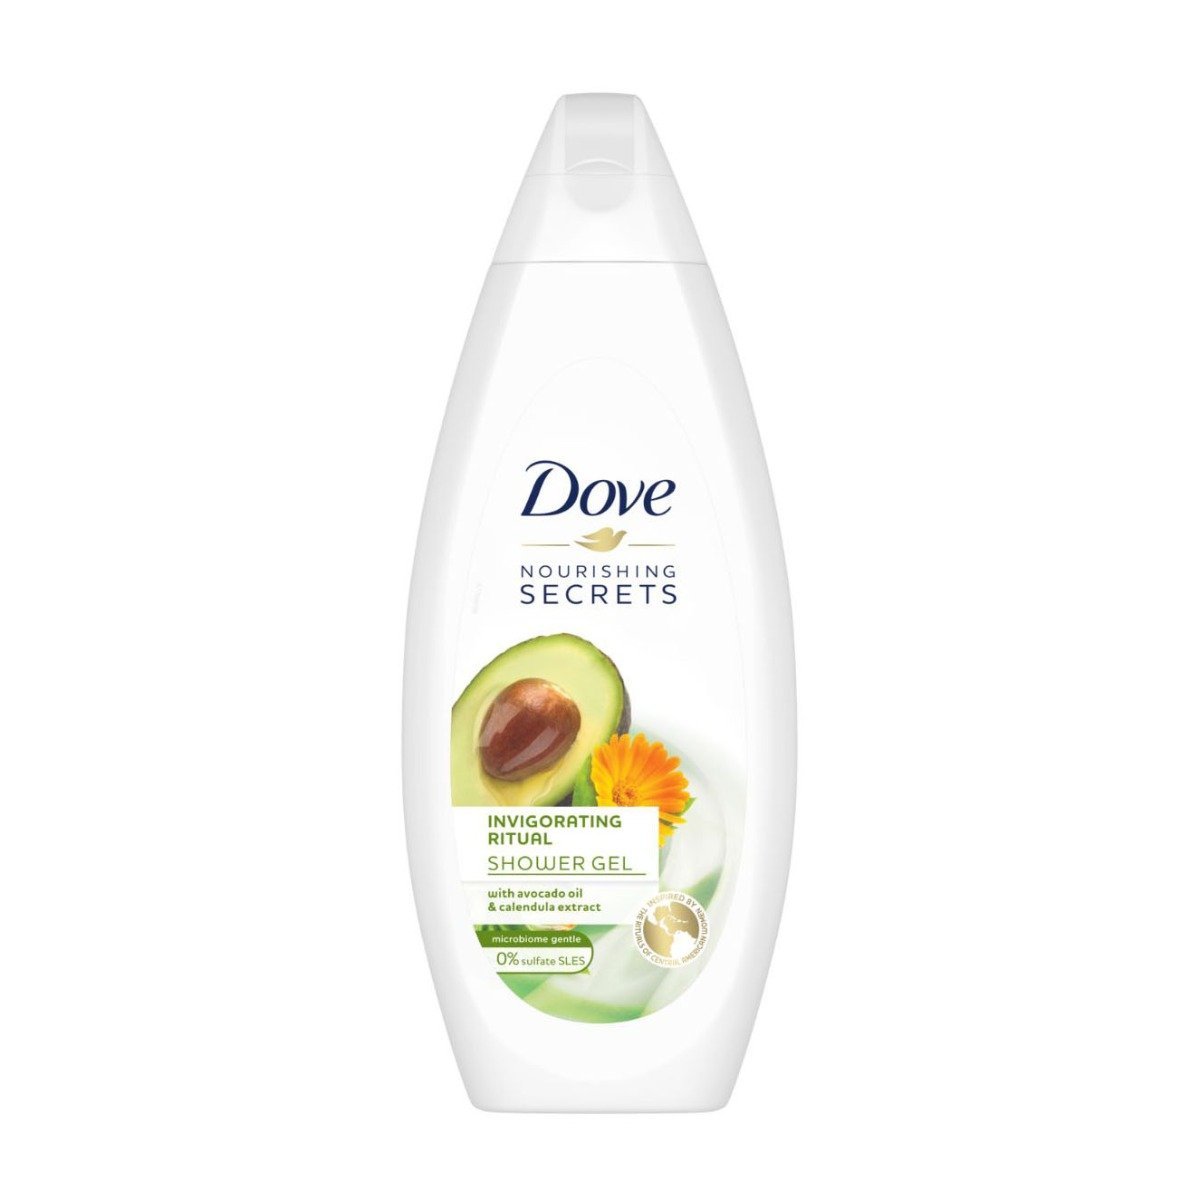 Dove Invigorating Ritual with Avocado Oil and Calendula Extracts Body Wash - 500ml - Bloom Pharmacy